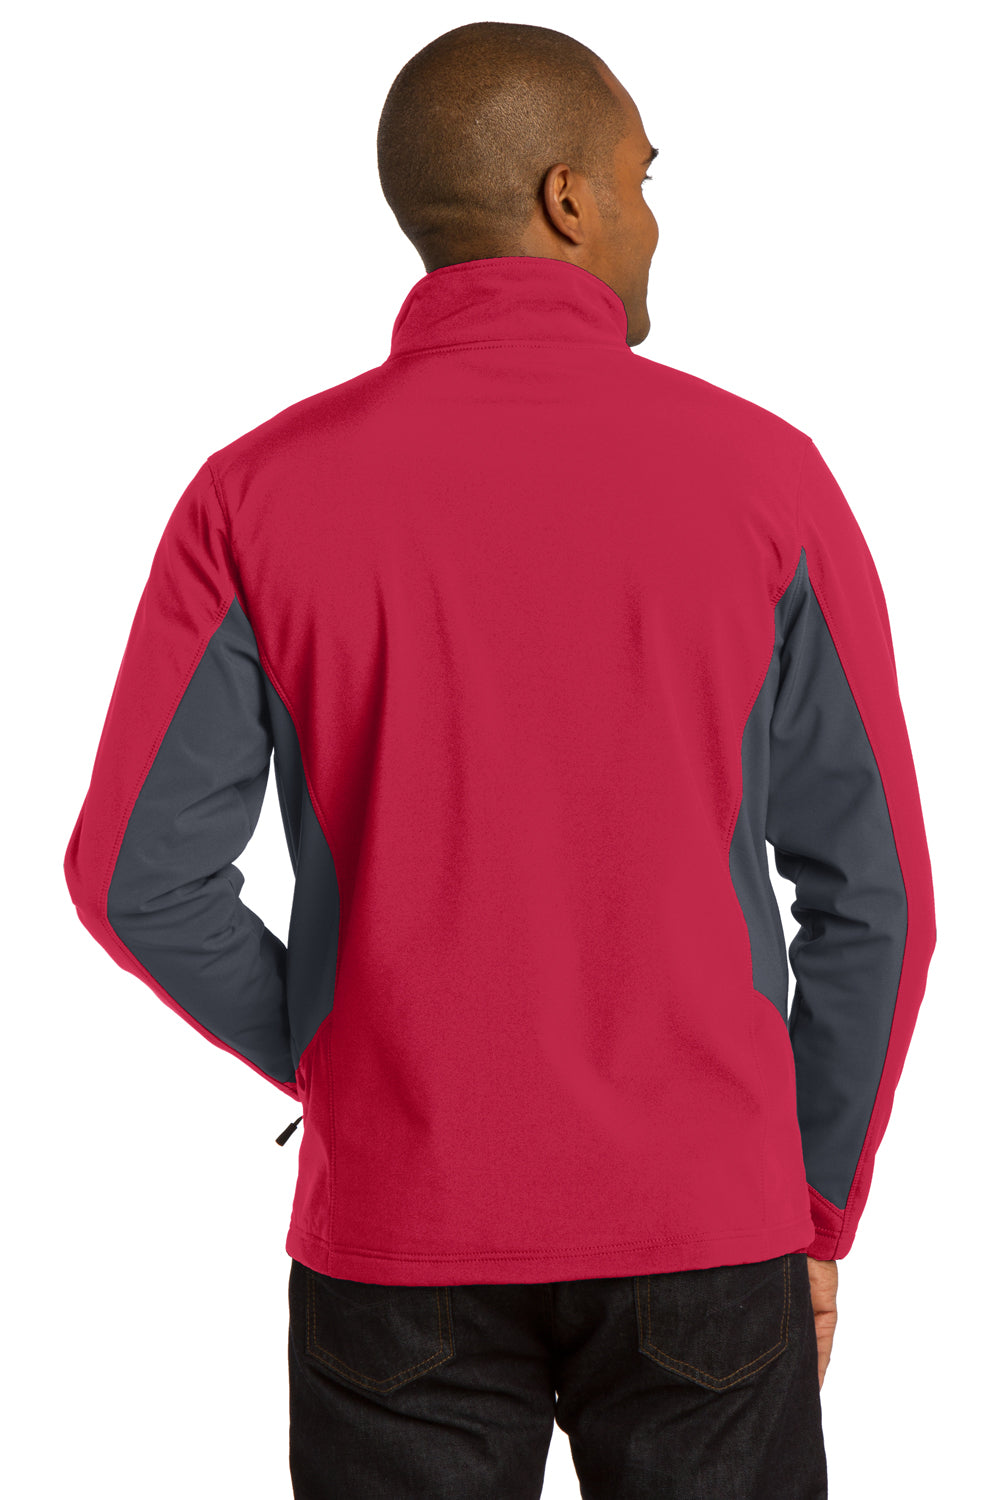 Port Authority J318 Mens Core Wind & Water Resistant Full Zip Jacket Red/Grey Back